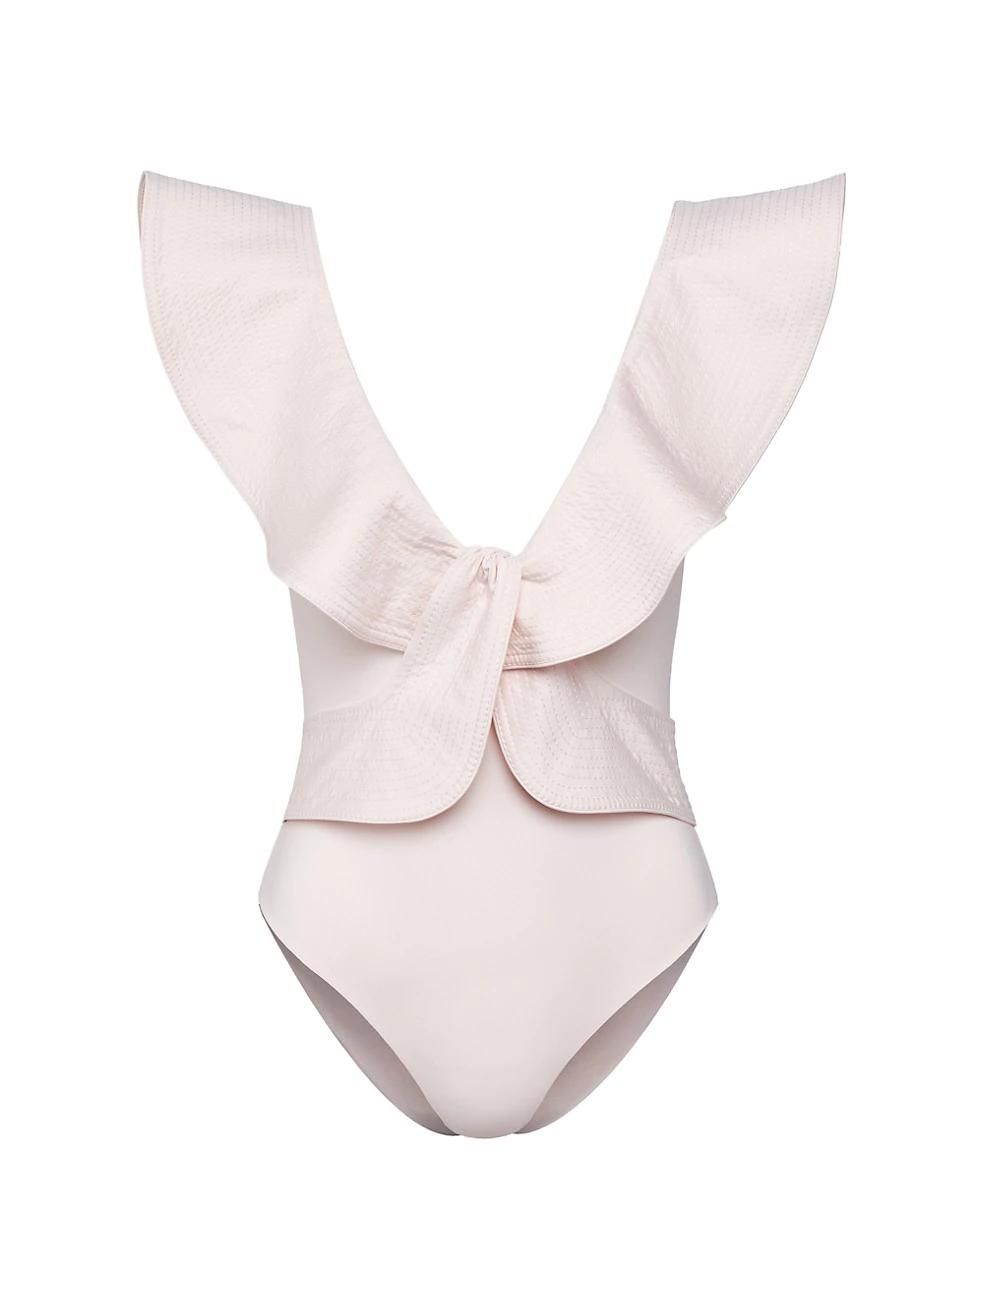 Johanna Ortiz - beachwear - bathing suit - white bathing suit - swimwear - swimsuit - white swimsuit